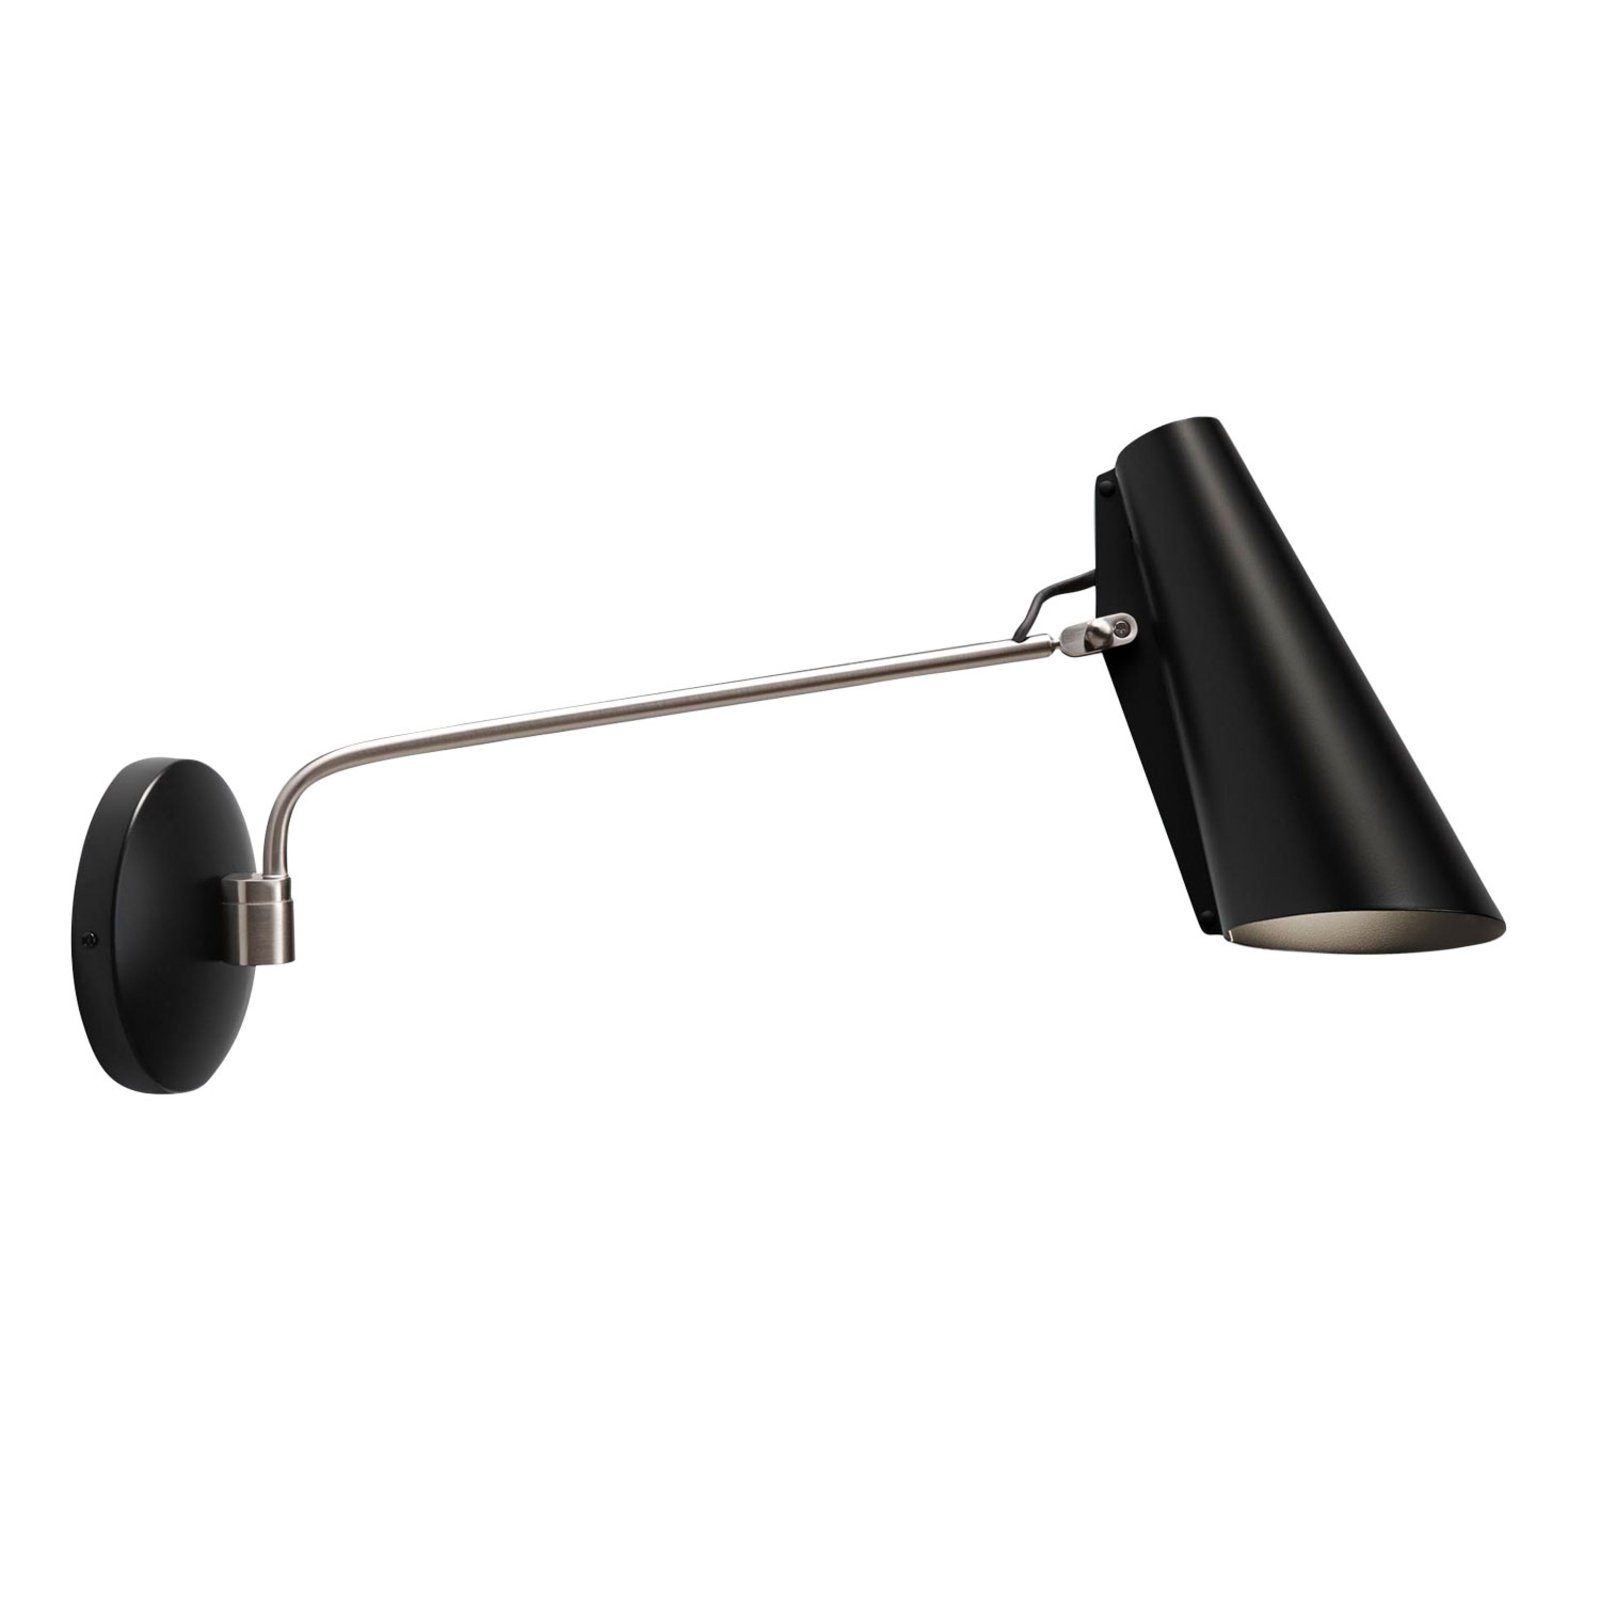 Northern Birdy - væglampe, 53 cm, sort/stål